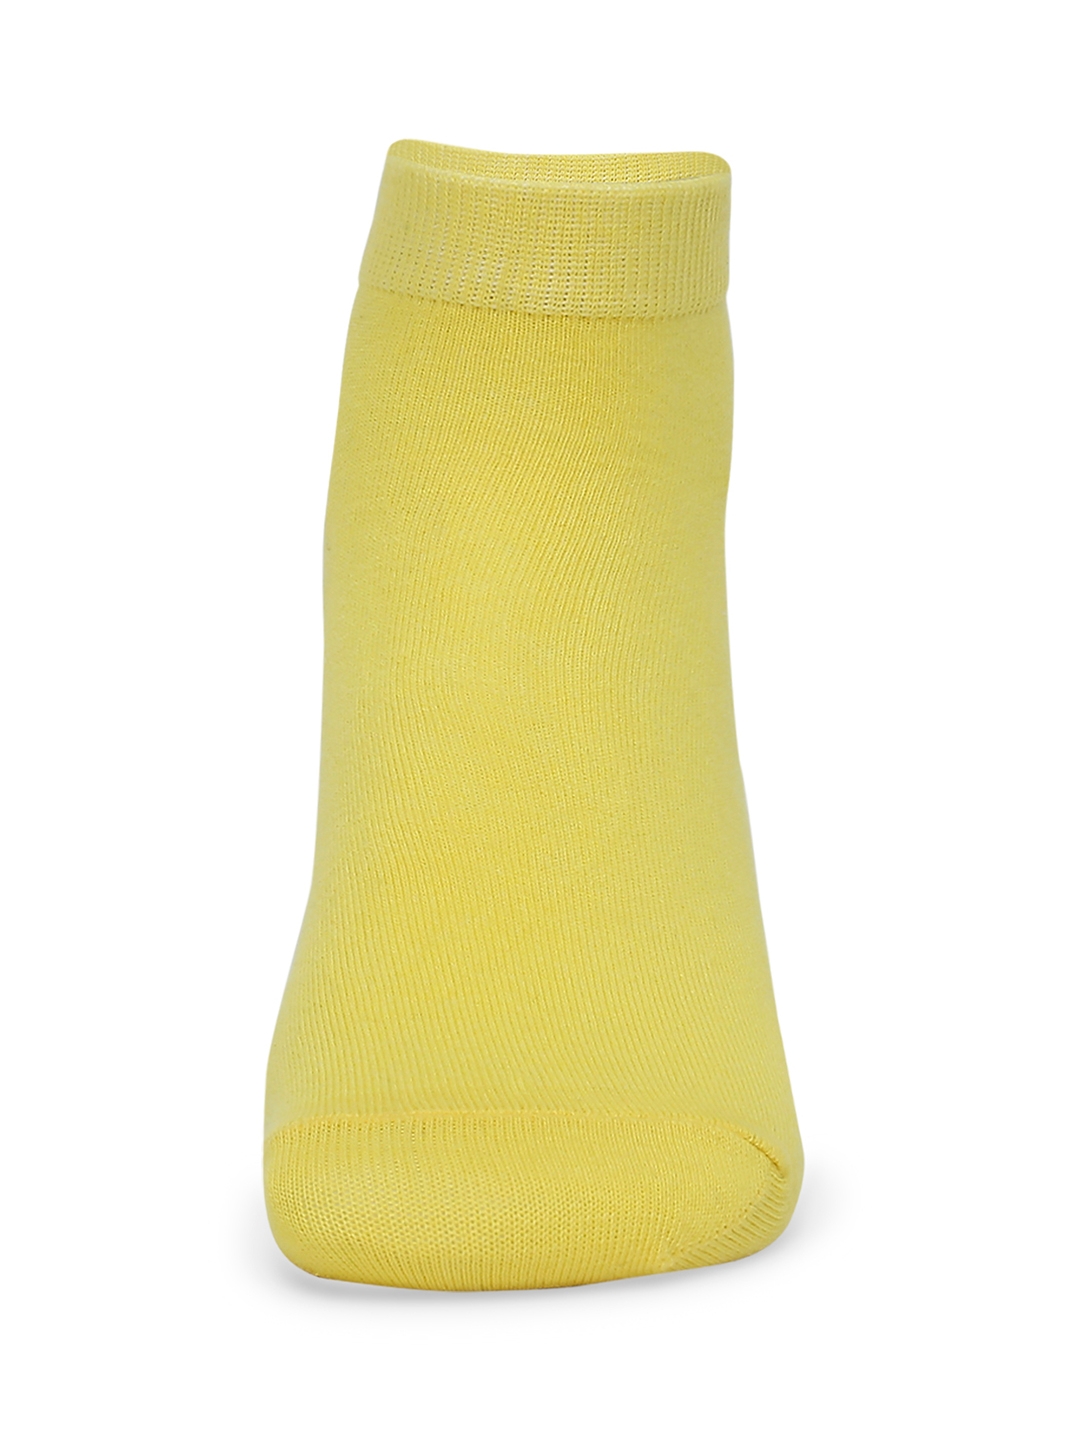 spykar | Underjeans By Spykar Men Olive & Yellow Cotton Blend Sneaker Socks - Pack Of 2 3